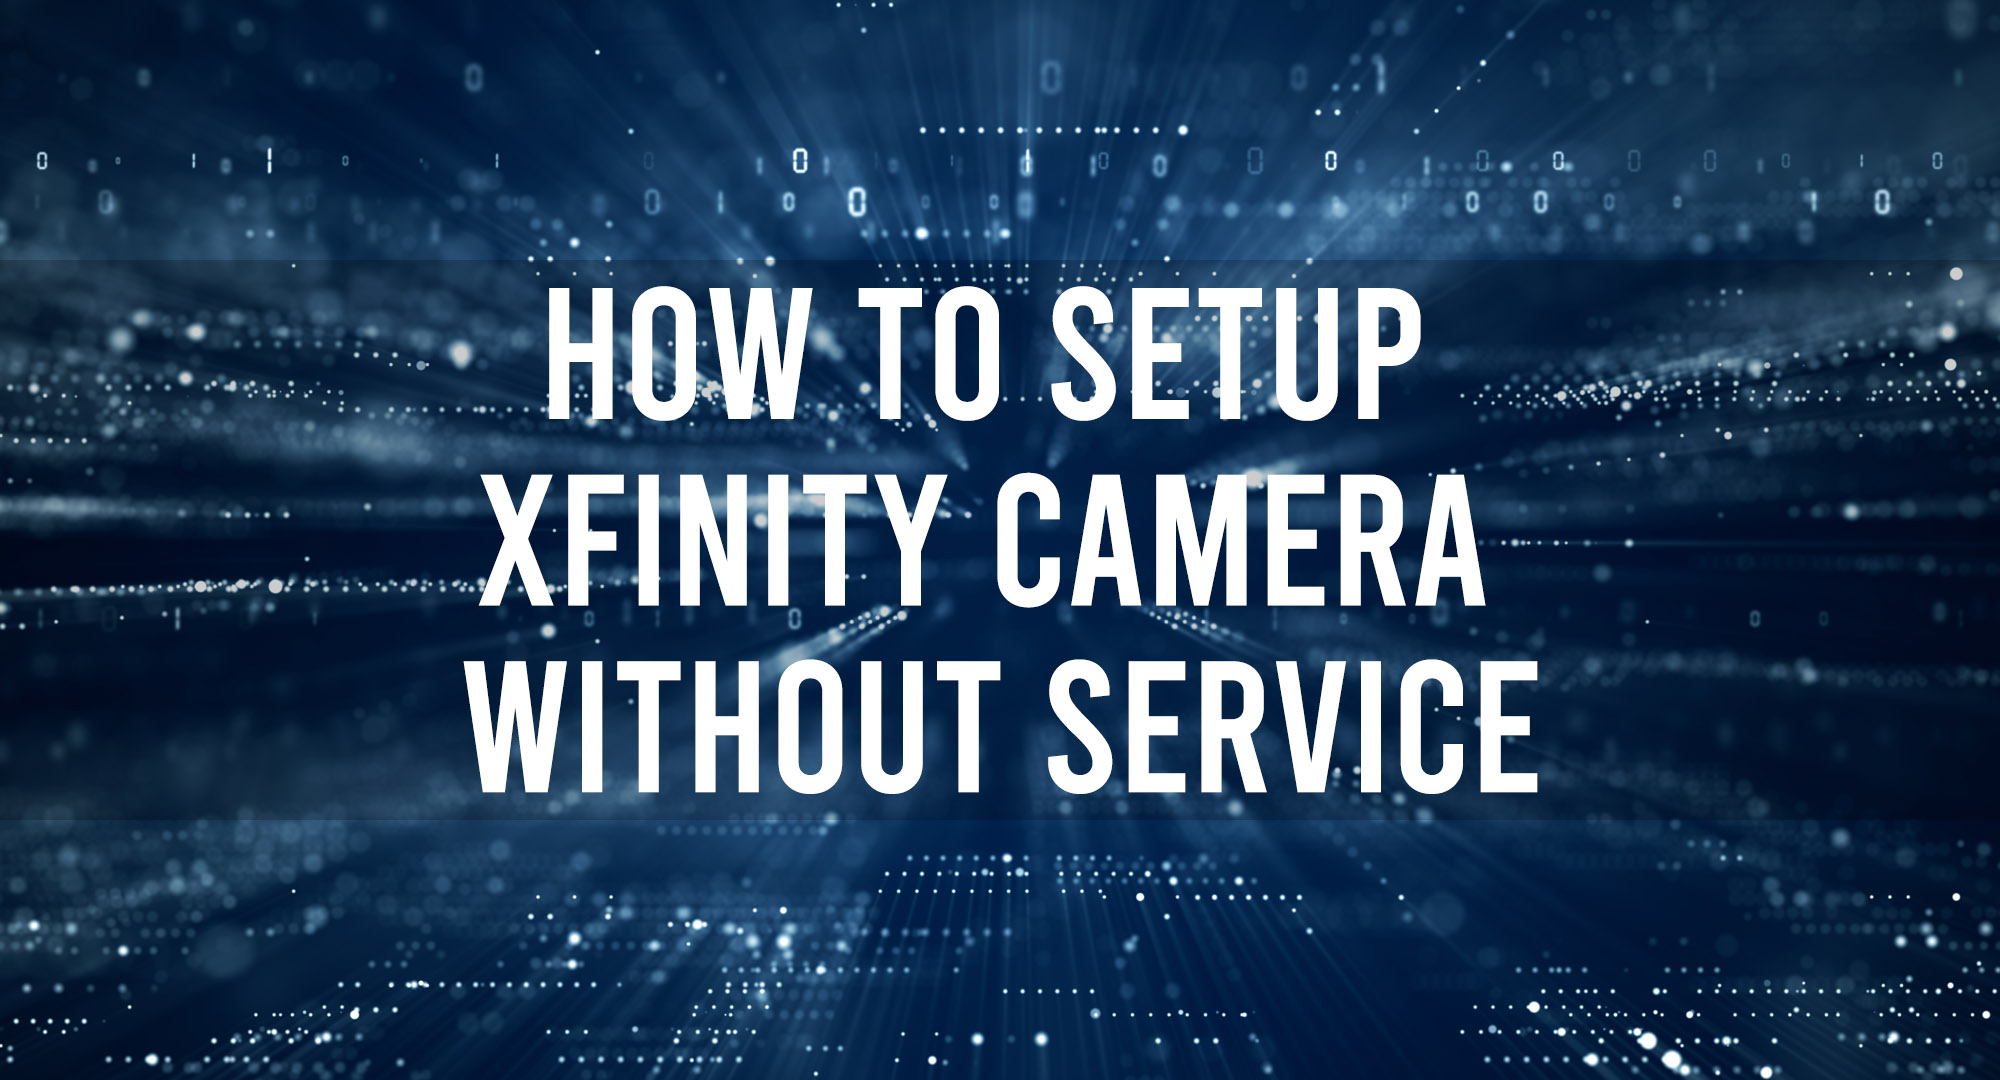 How to Setup Xfinity Camera Without Service